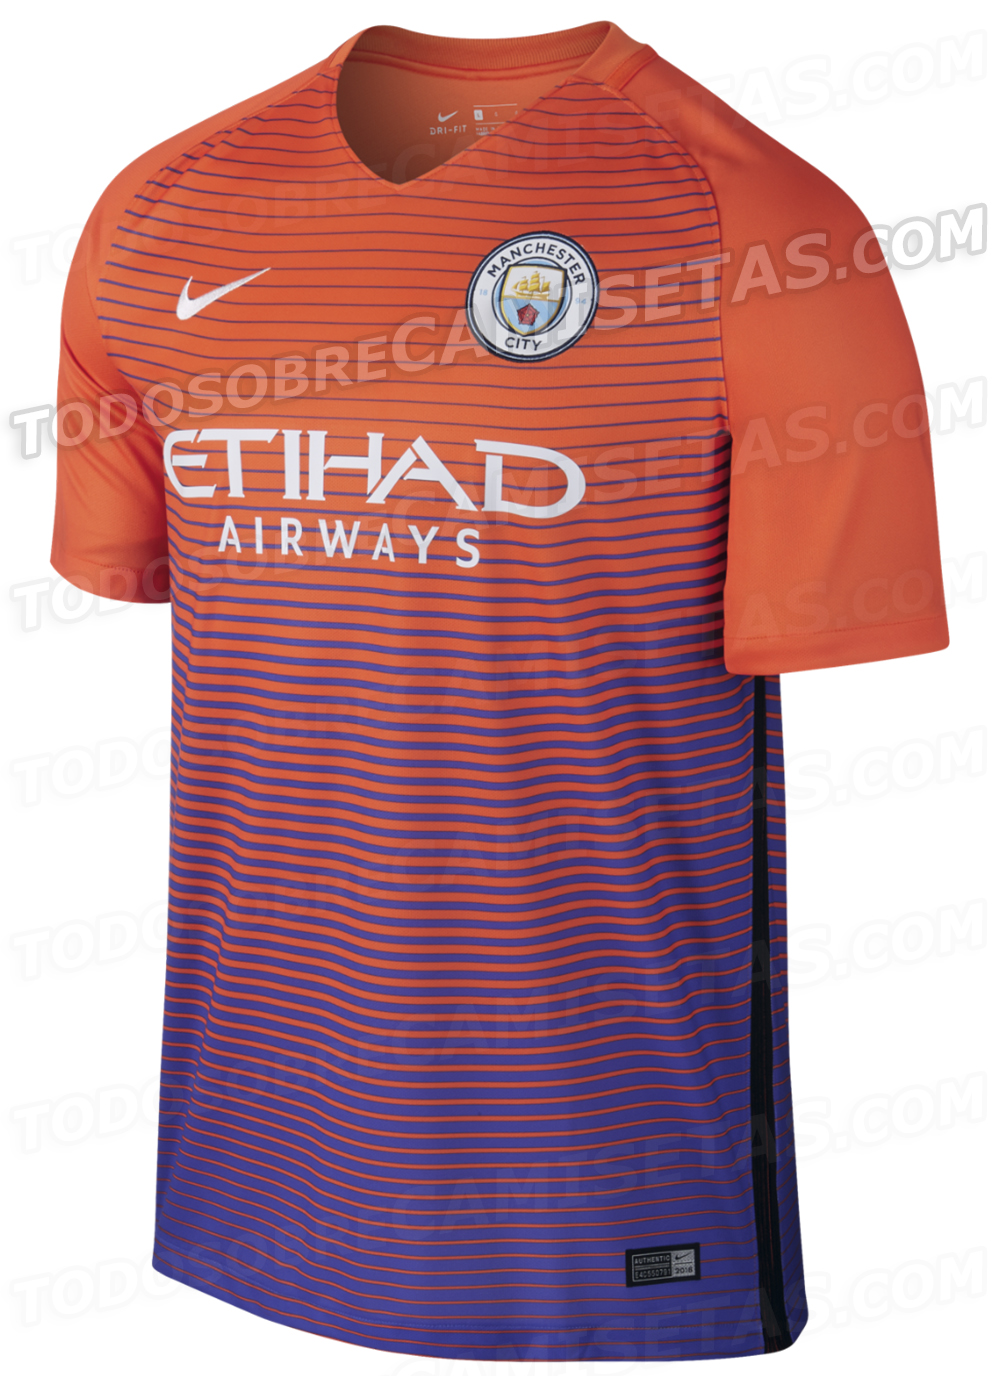 Manchester City 2016-17 Nike Third Kit LEAKED